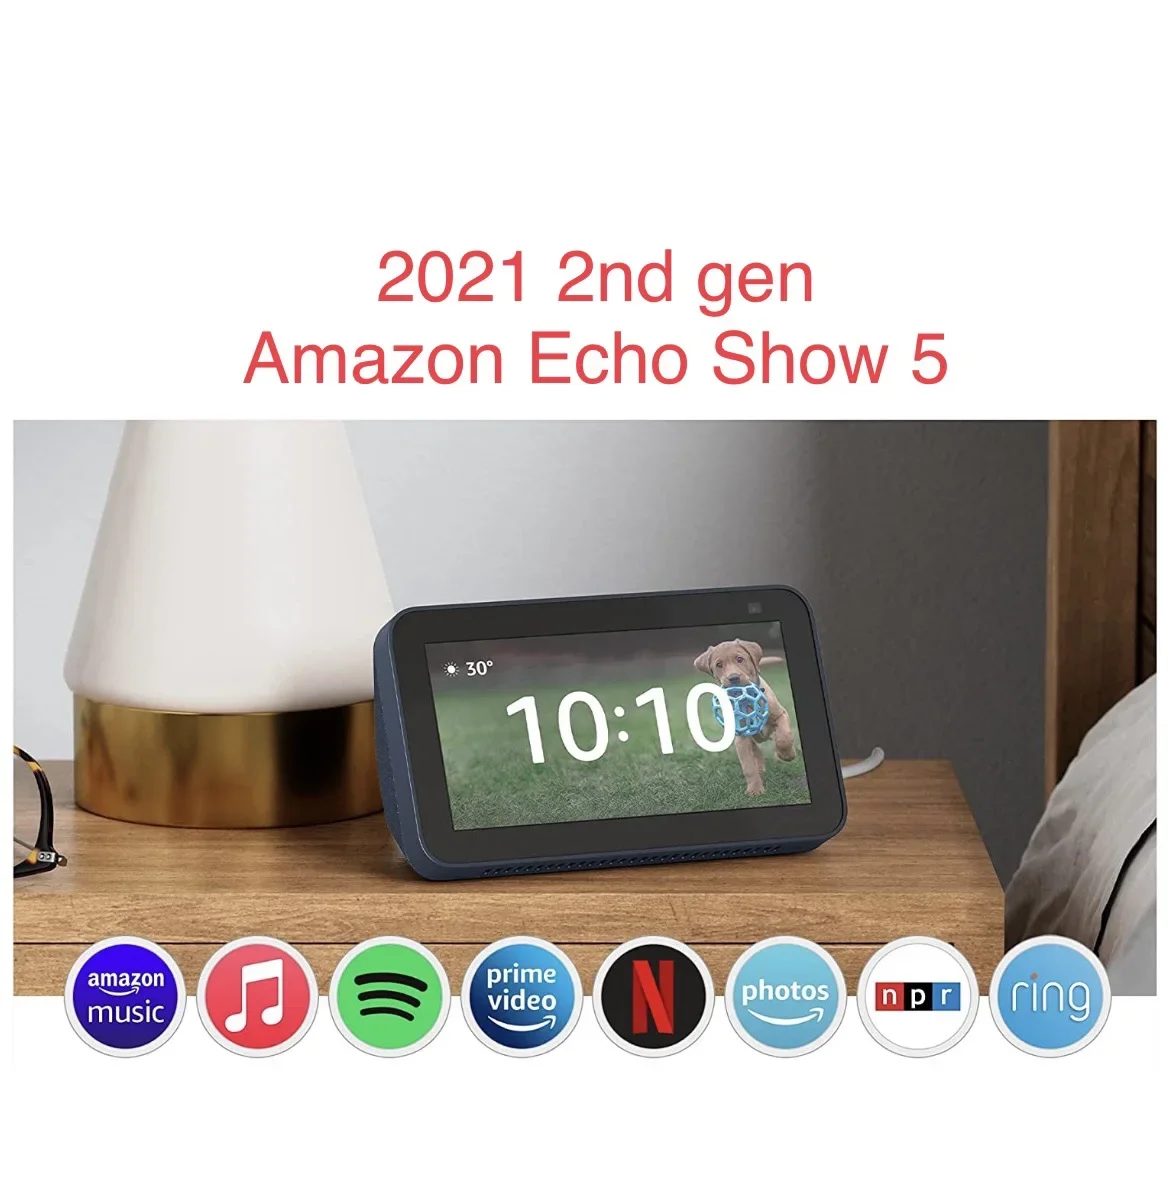 2021 2nd gen Echo Show 5 - Latest Amazon Echo Show 5 - Amazon Echo Show 2019 - Compact smart display with Alexa - Charcoal Sandstone (US Version)